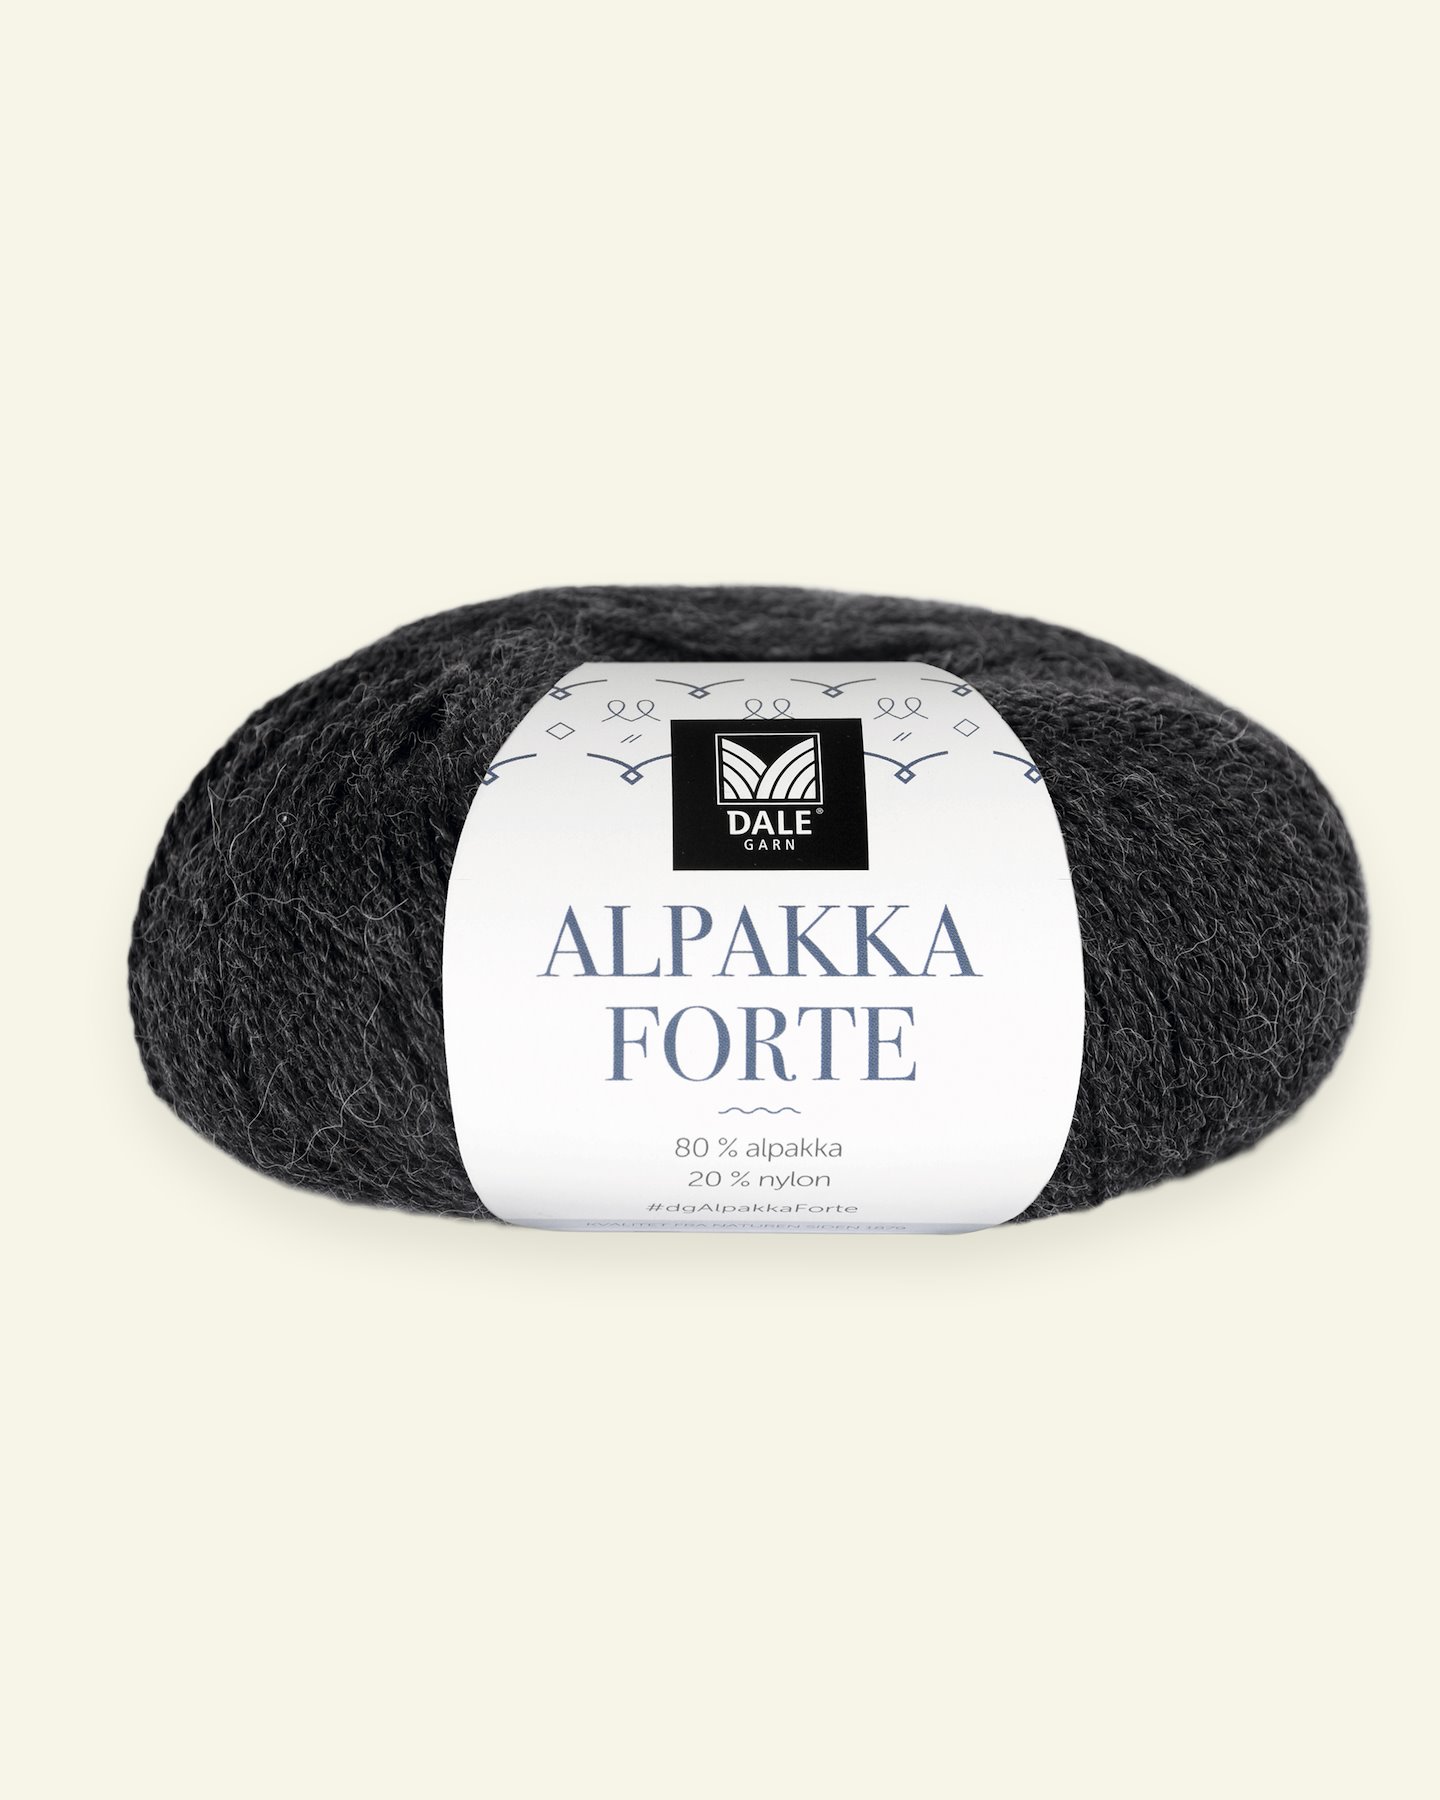 Dale Garn, Alpakawolle "Alpakka Forte", anthrazit mel. (710) 90000444_pack